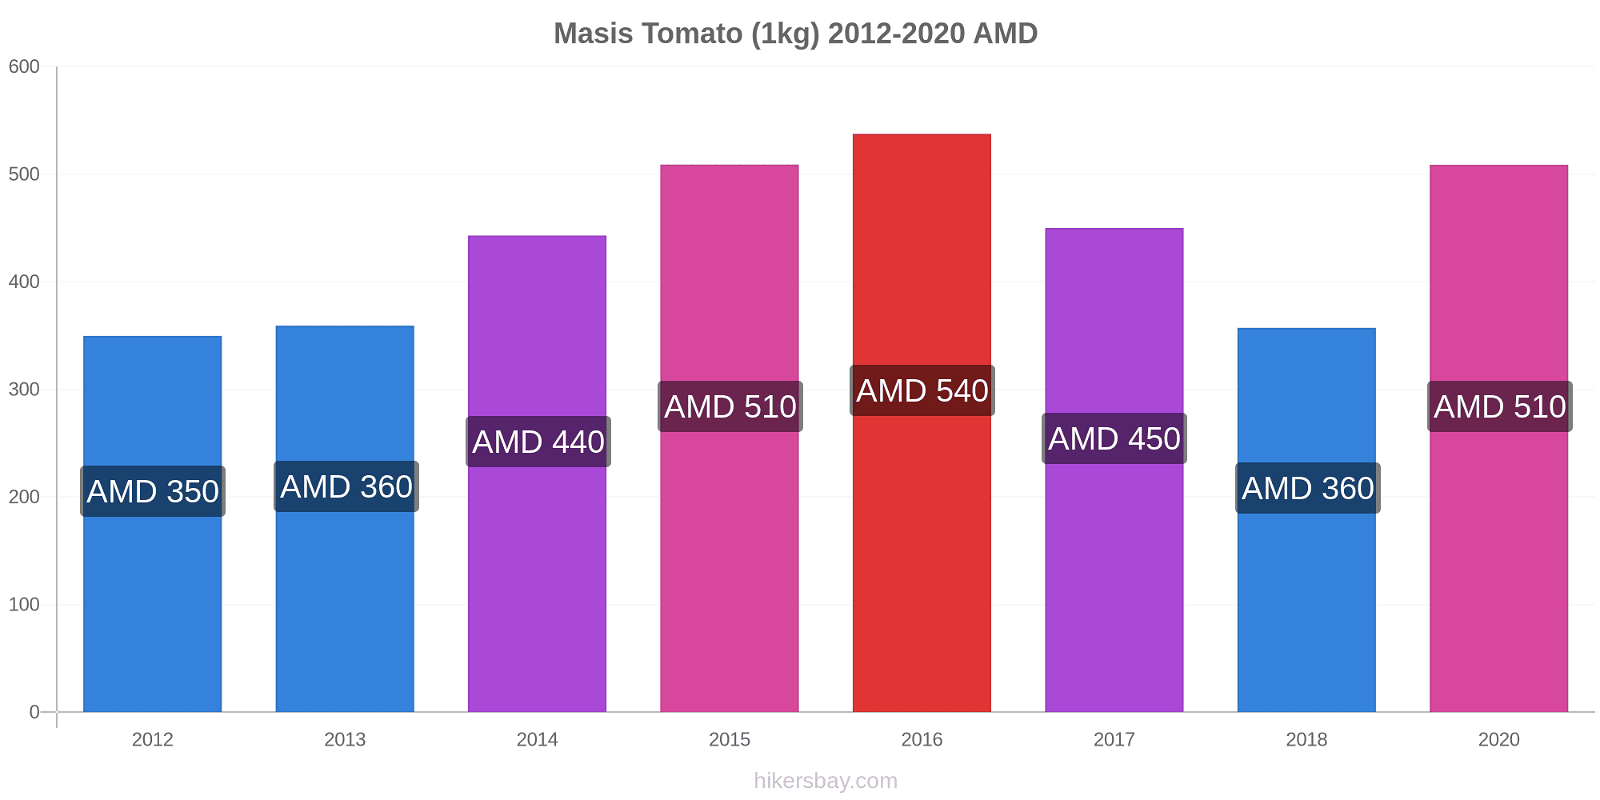 Masis price changes Tomato (1kg) hikersbay.com